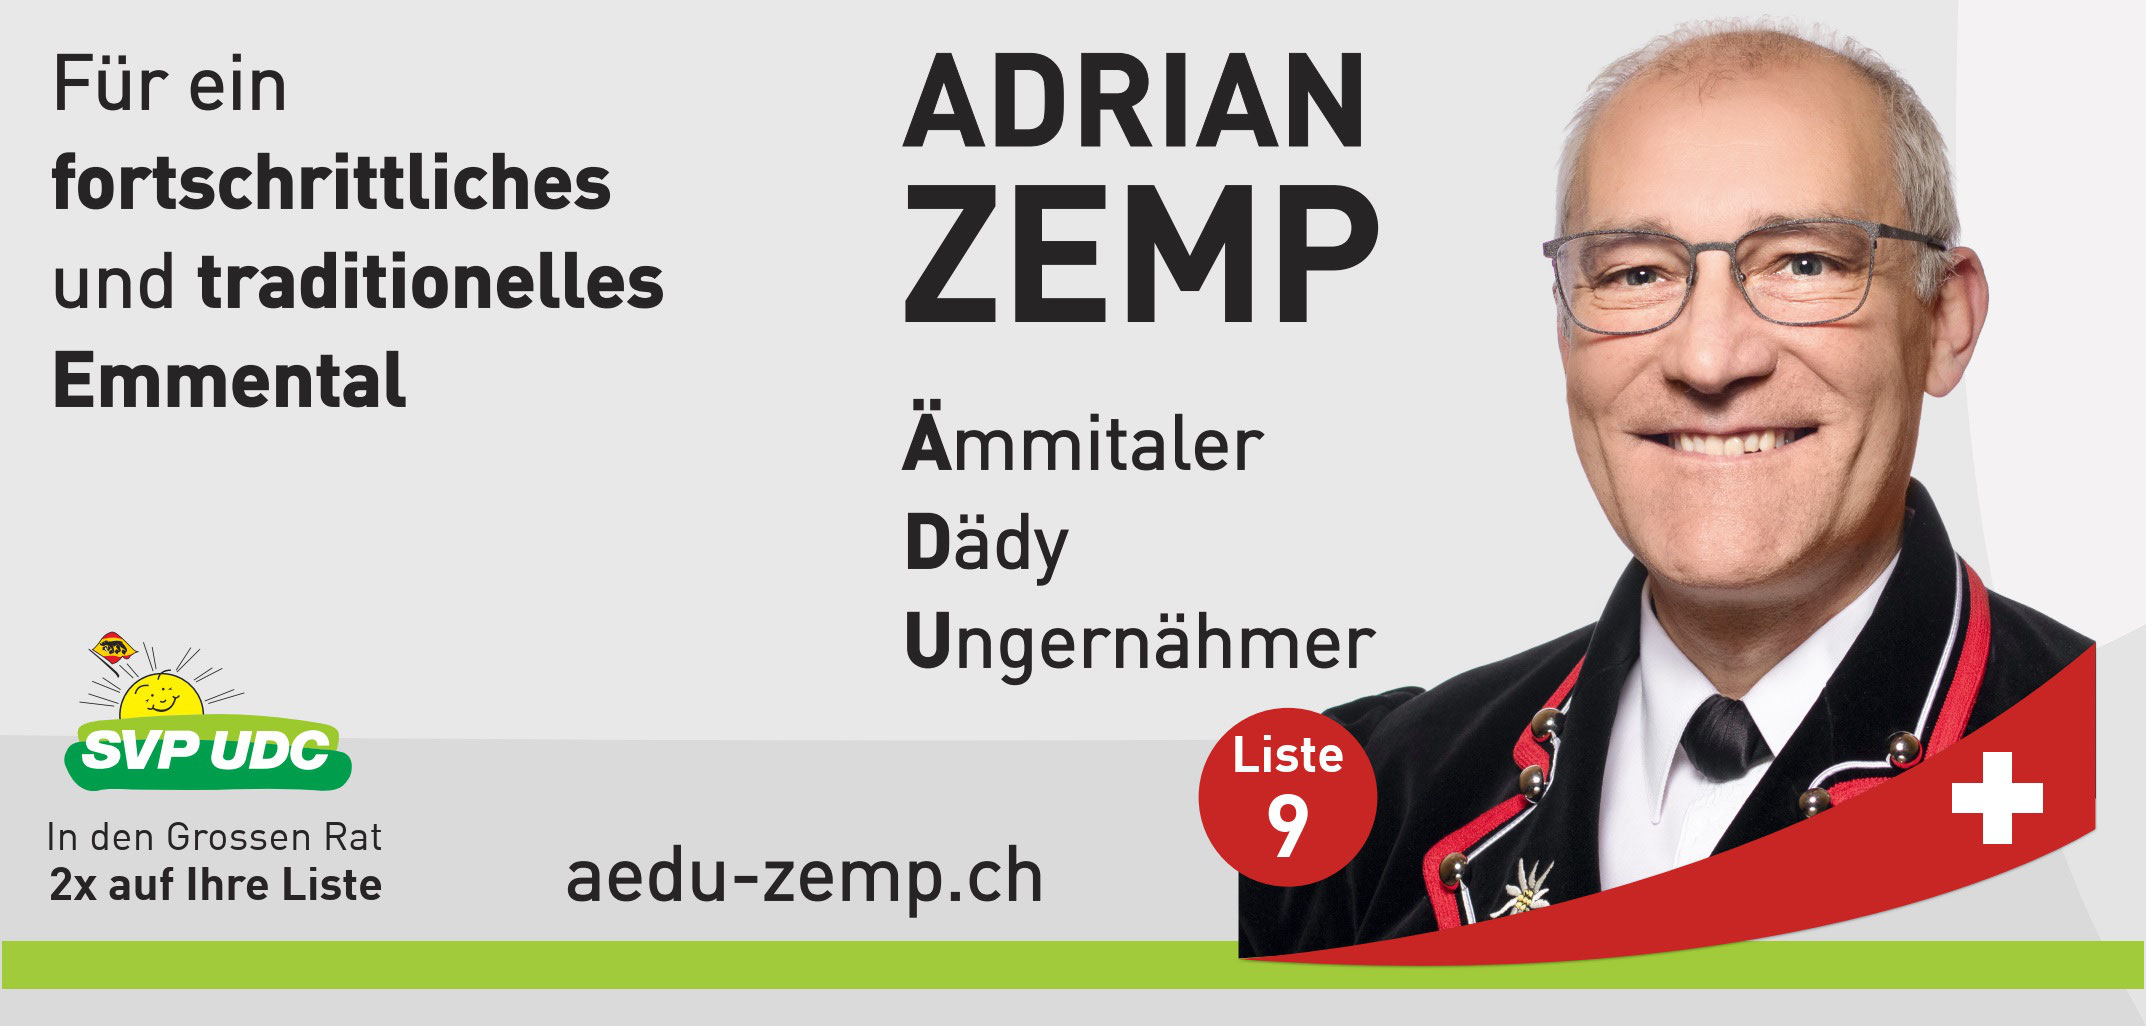 (c) Aedu-zemp.ch